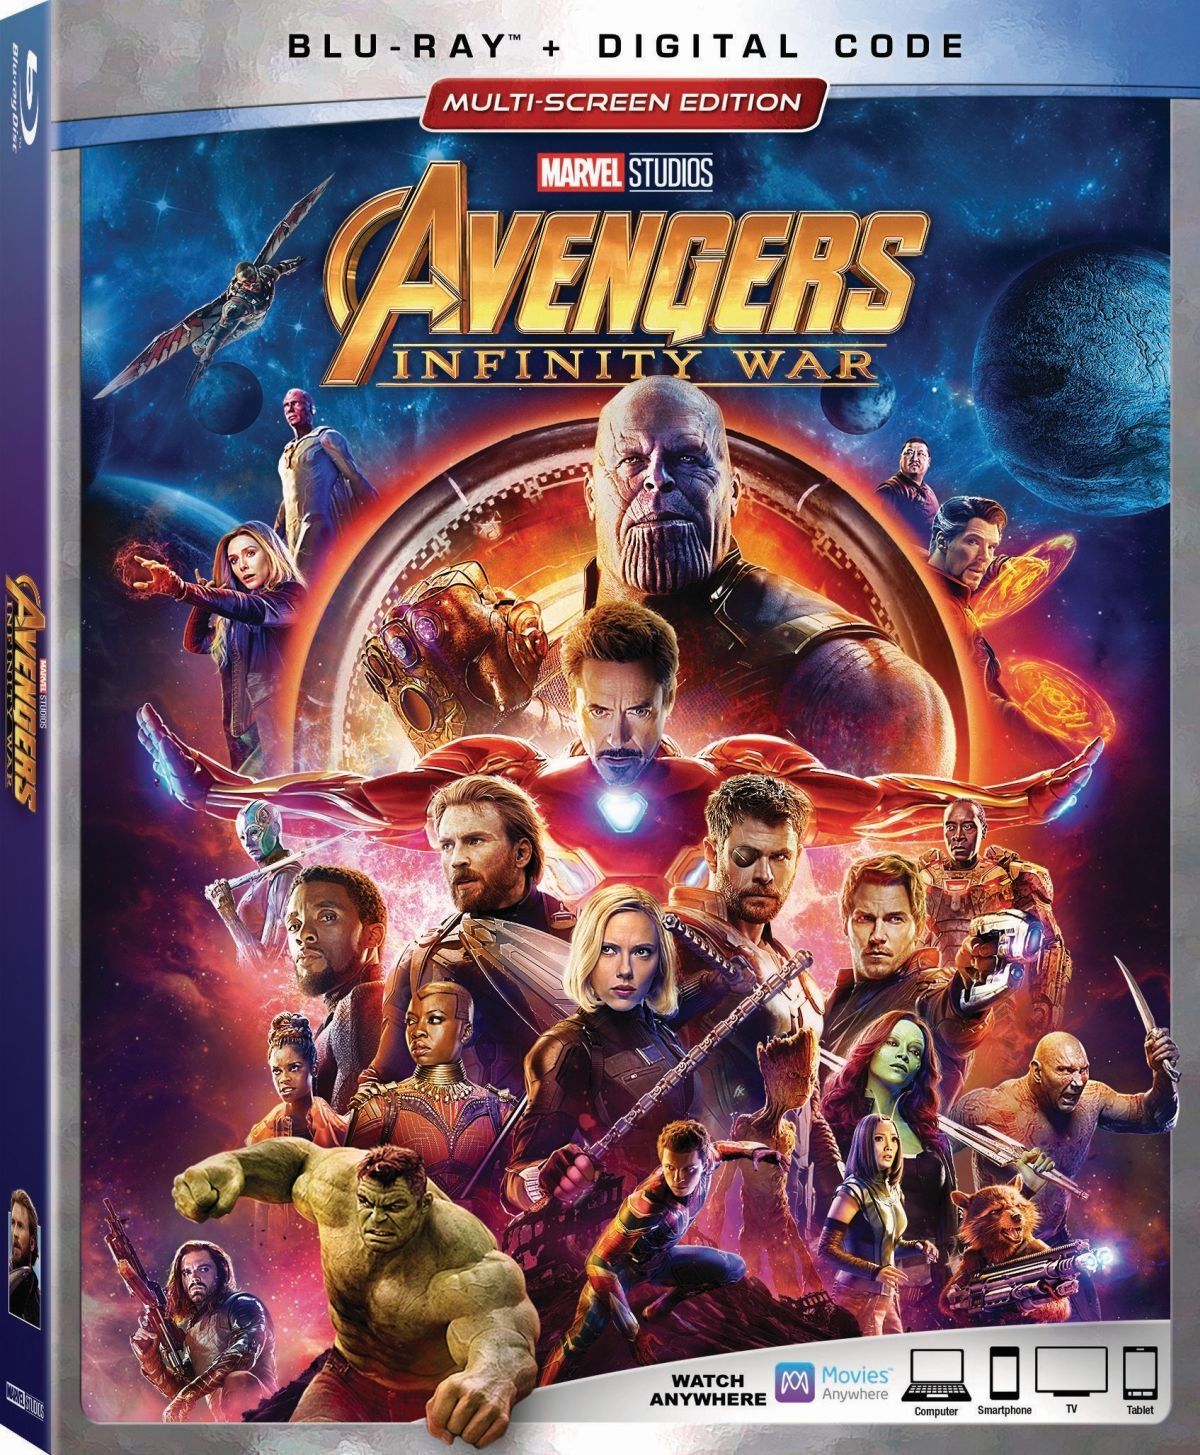 INfinity War Blu-Ray cover art